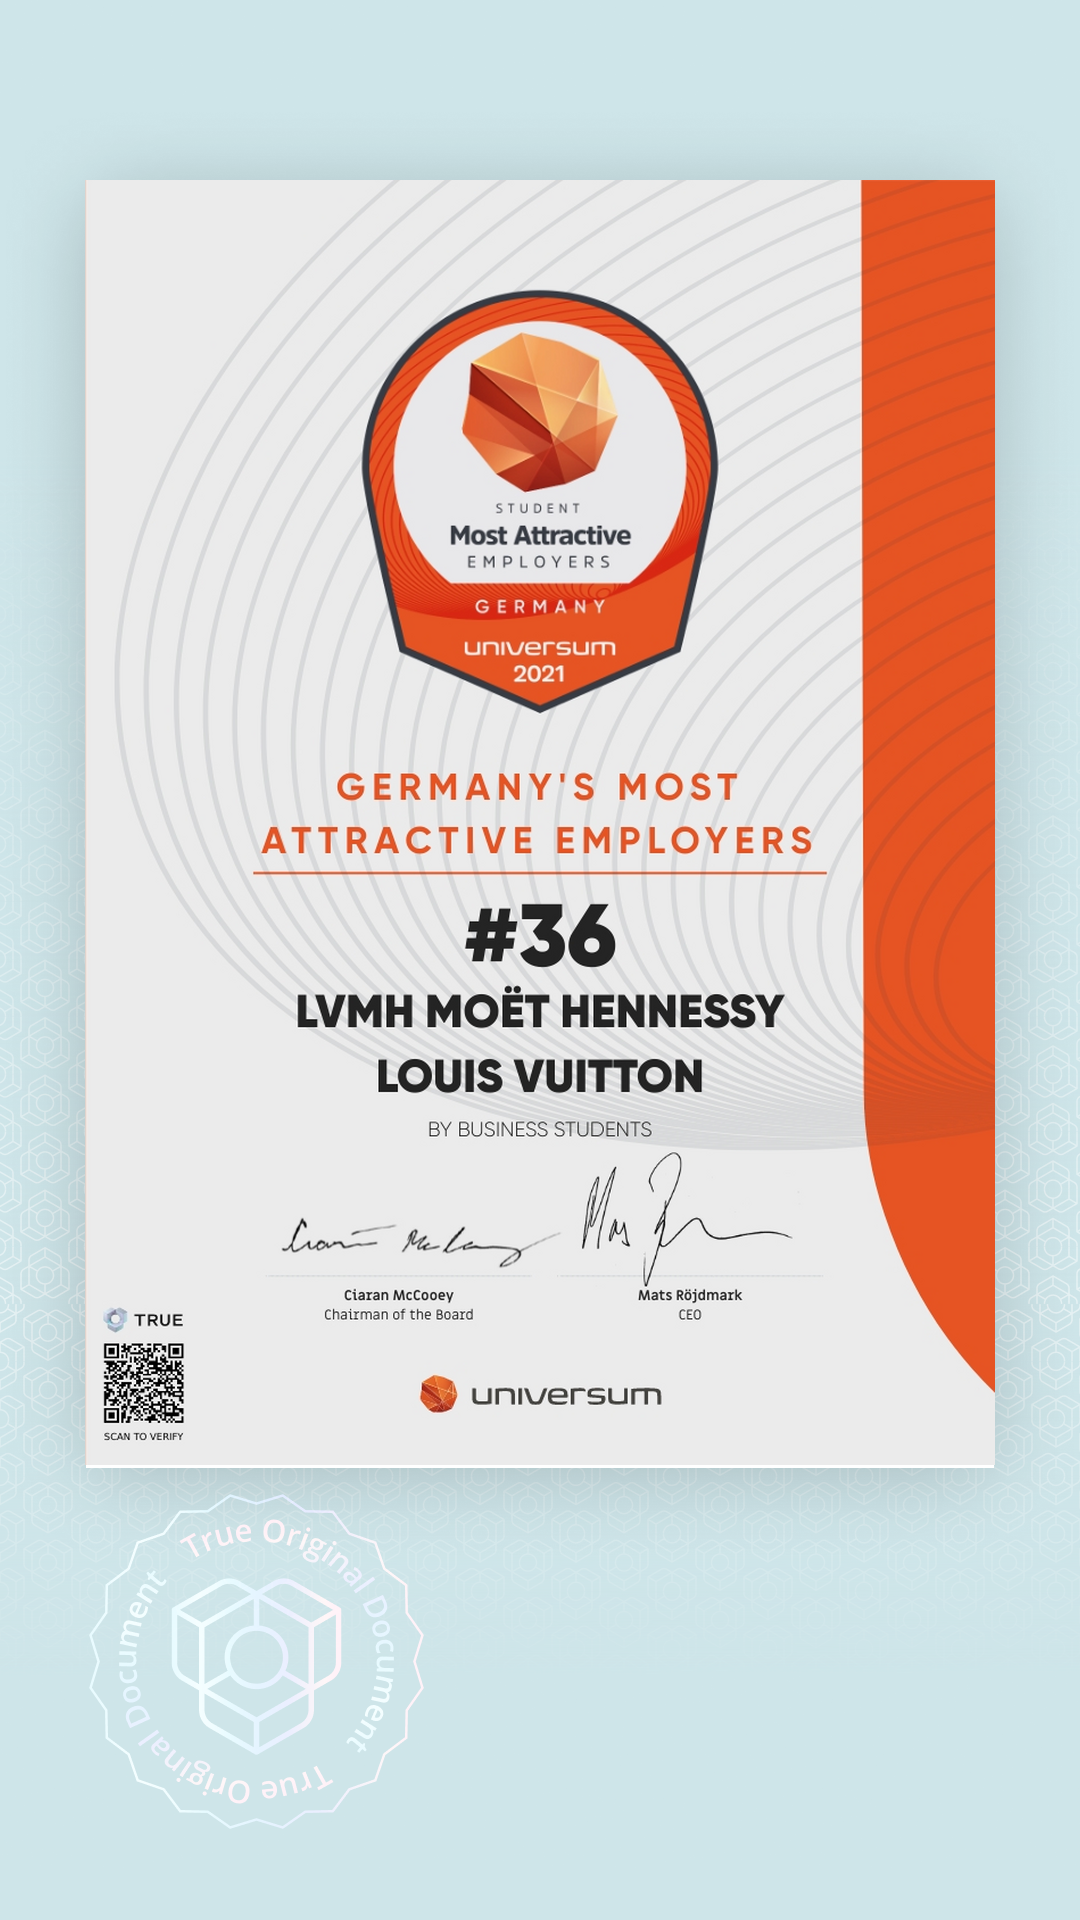 Finshots on Instagram: Last week, LVMH (Louis Vuitton Moet